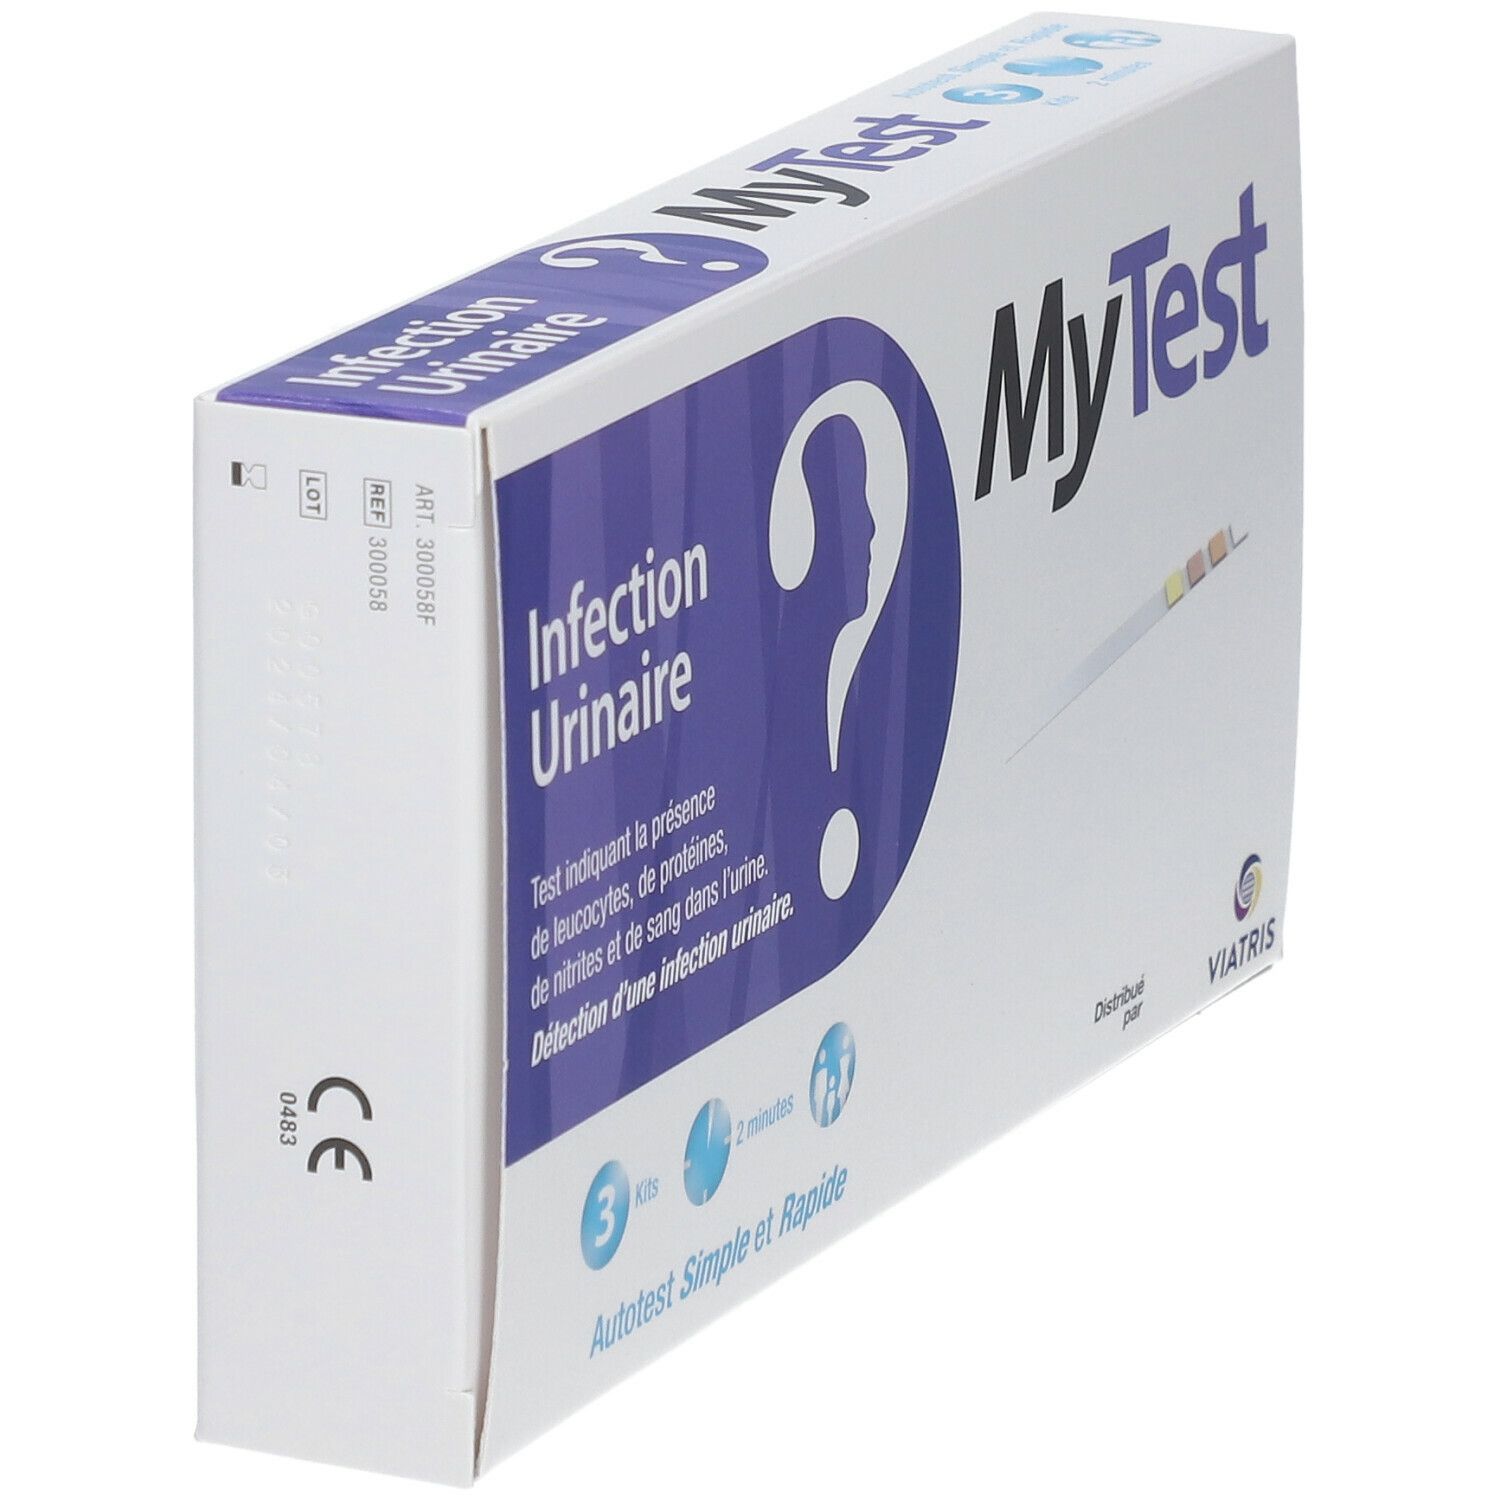 Mylan MyTest Infection Urinaire Pack Avec 3 Kits